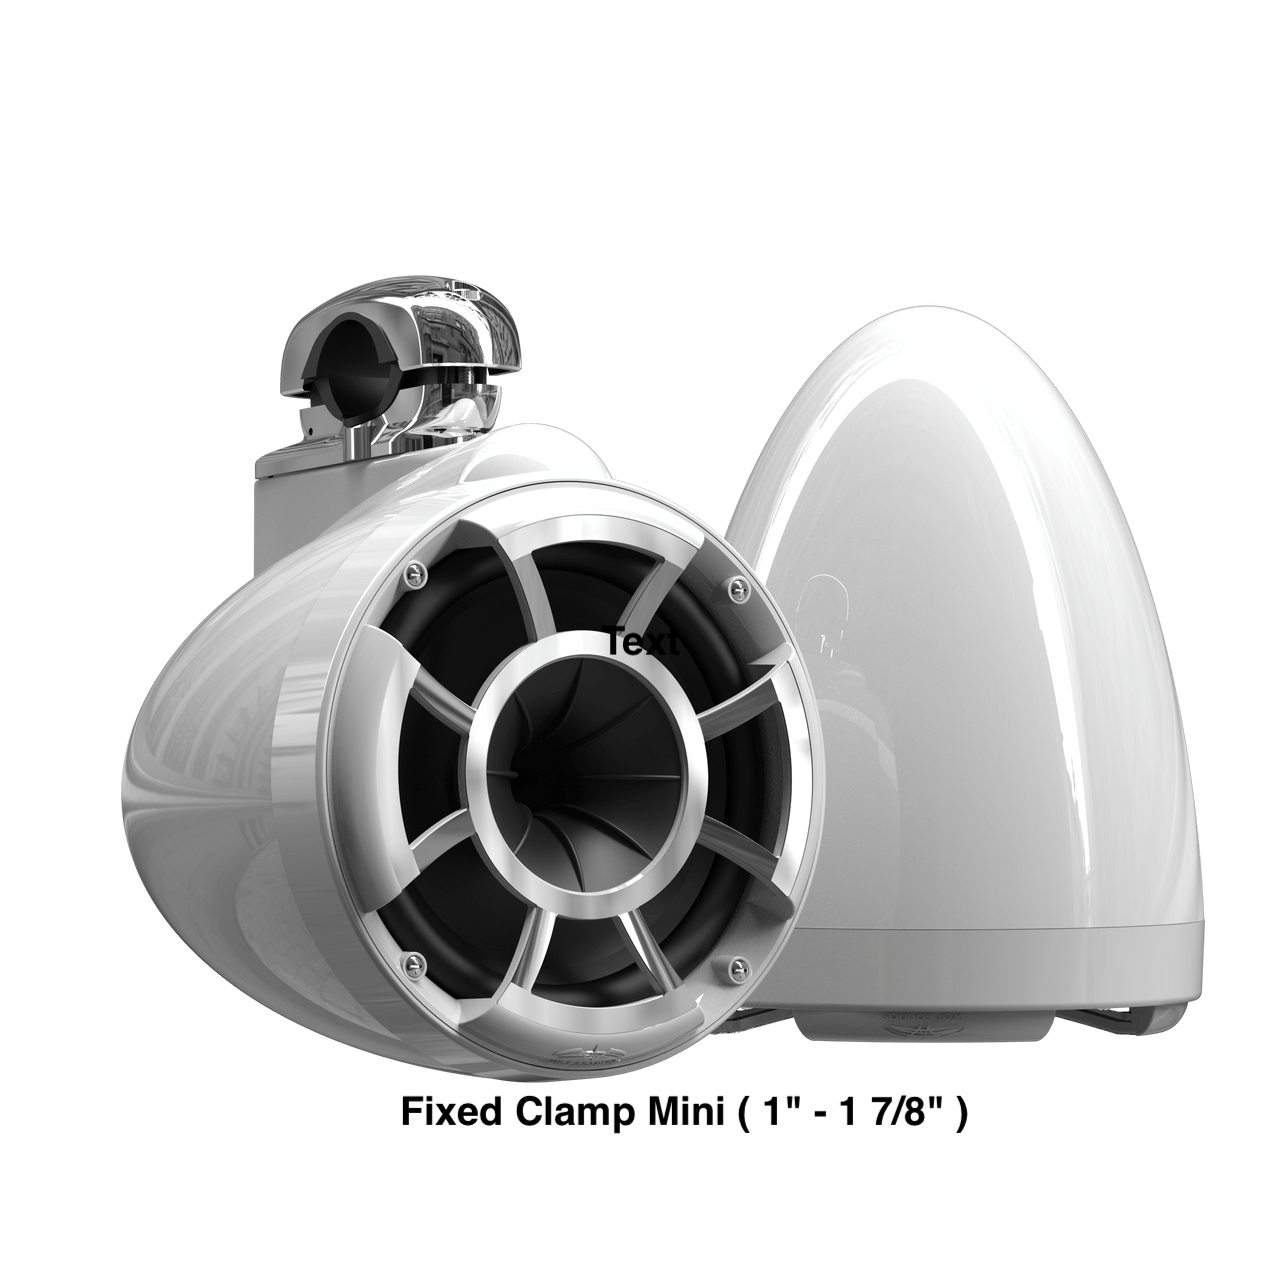 Wet Sounds Boat Wake Tower Speakers Fixed Clamp Mini ( 1" - 1 7/8" ) Wet Sounds REV8™ White V2 | Revolution Series 8" White Tower Speakers